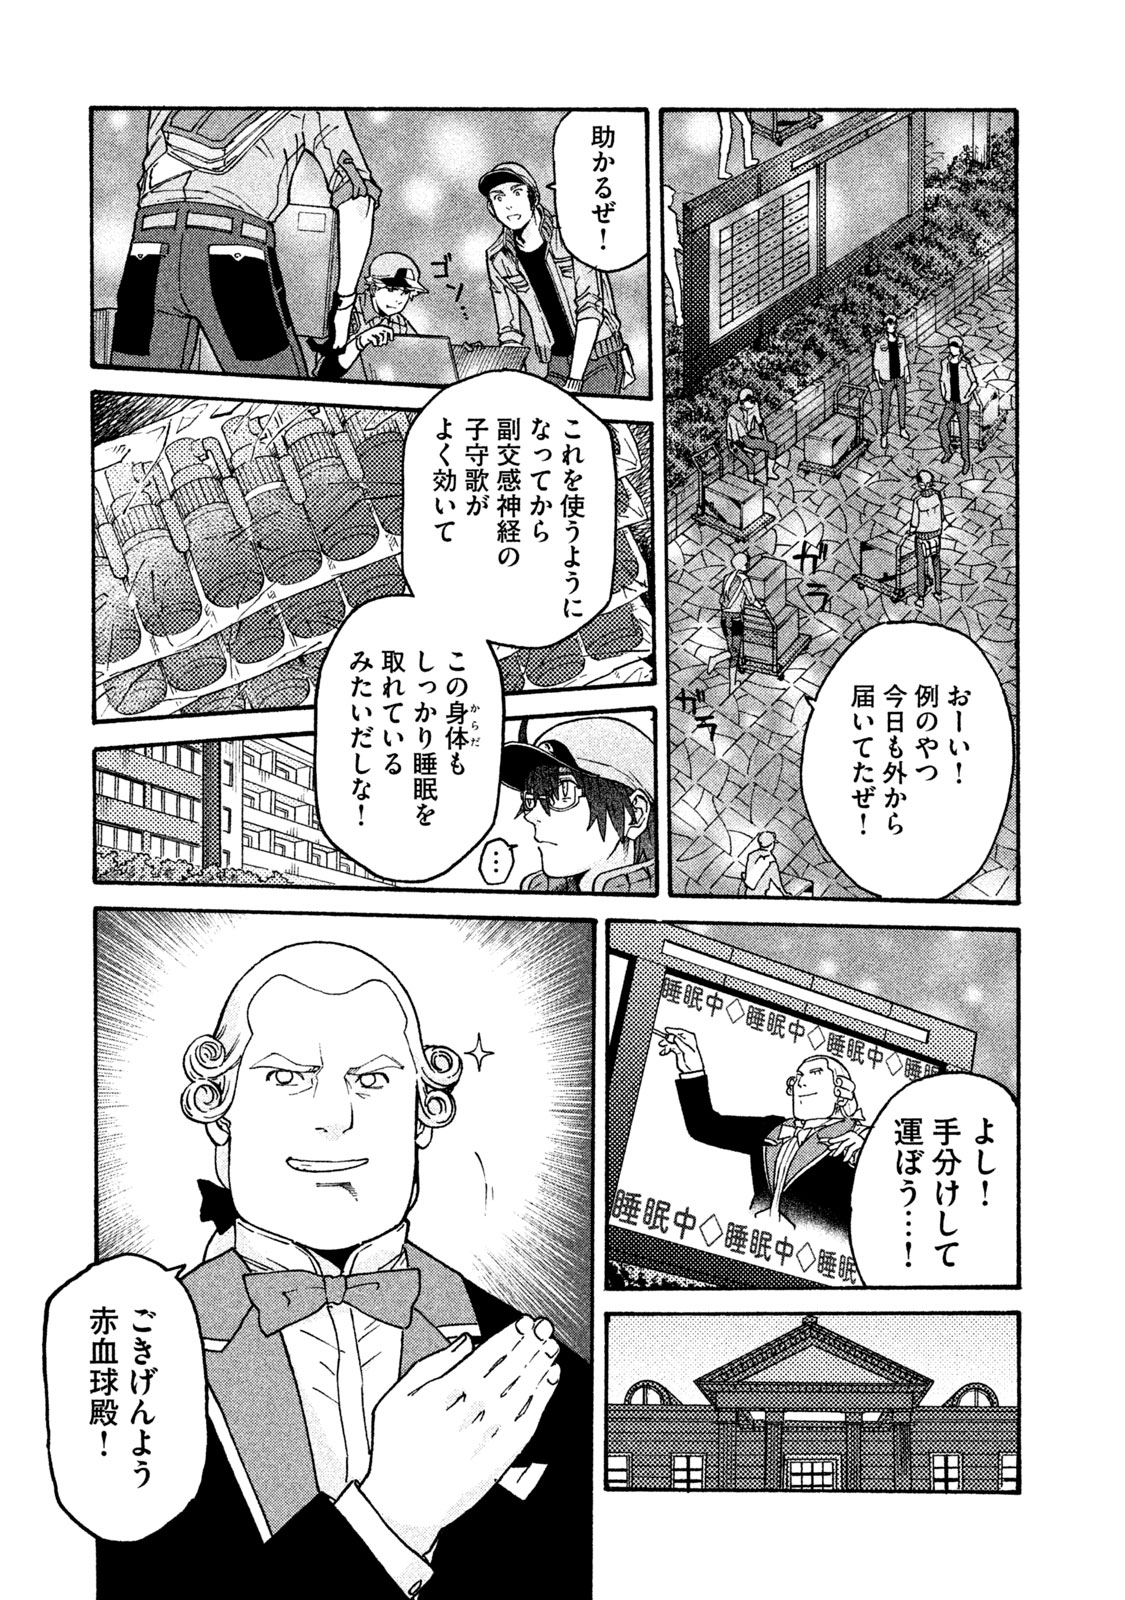 Hataraku Saibou BLACK - Chapter 31 - Page 5